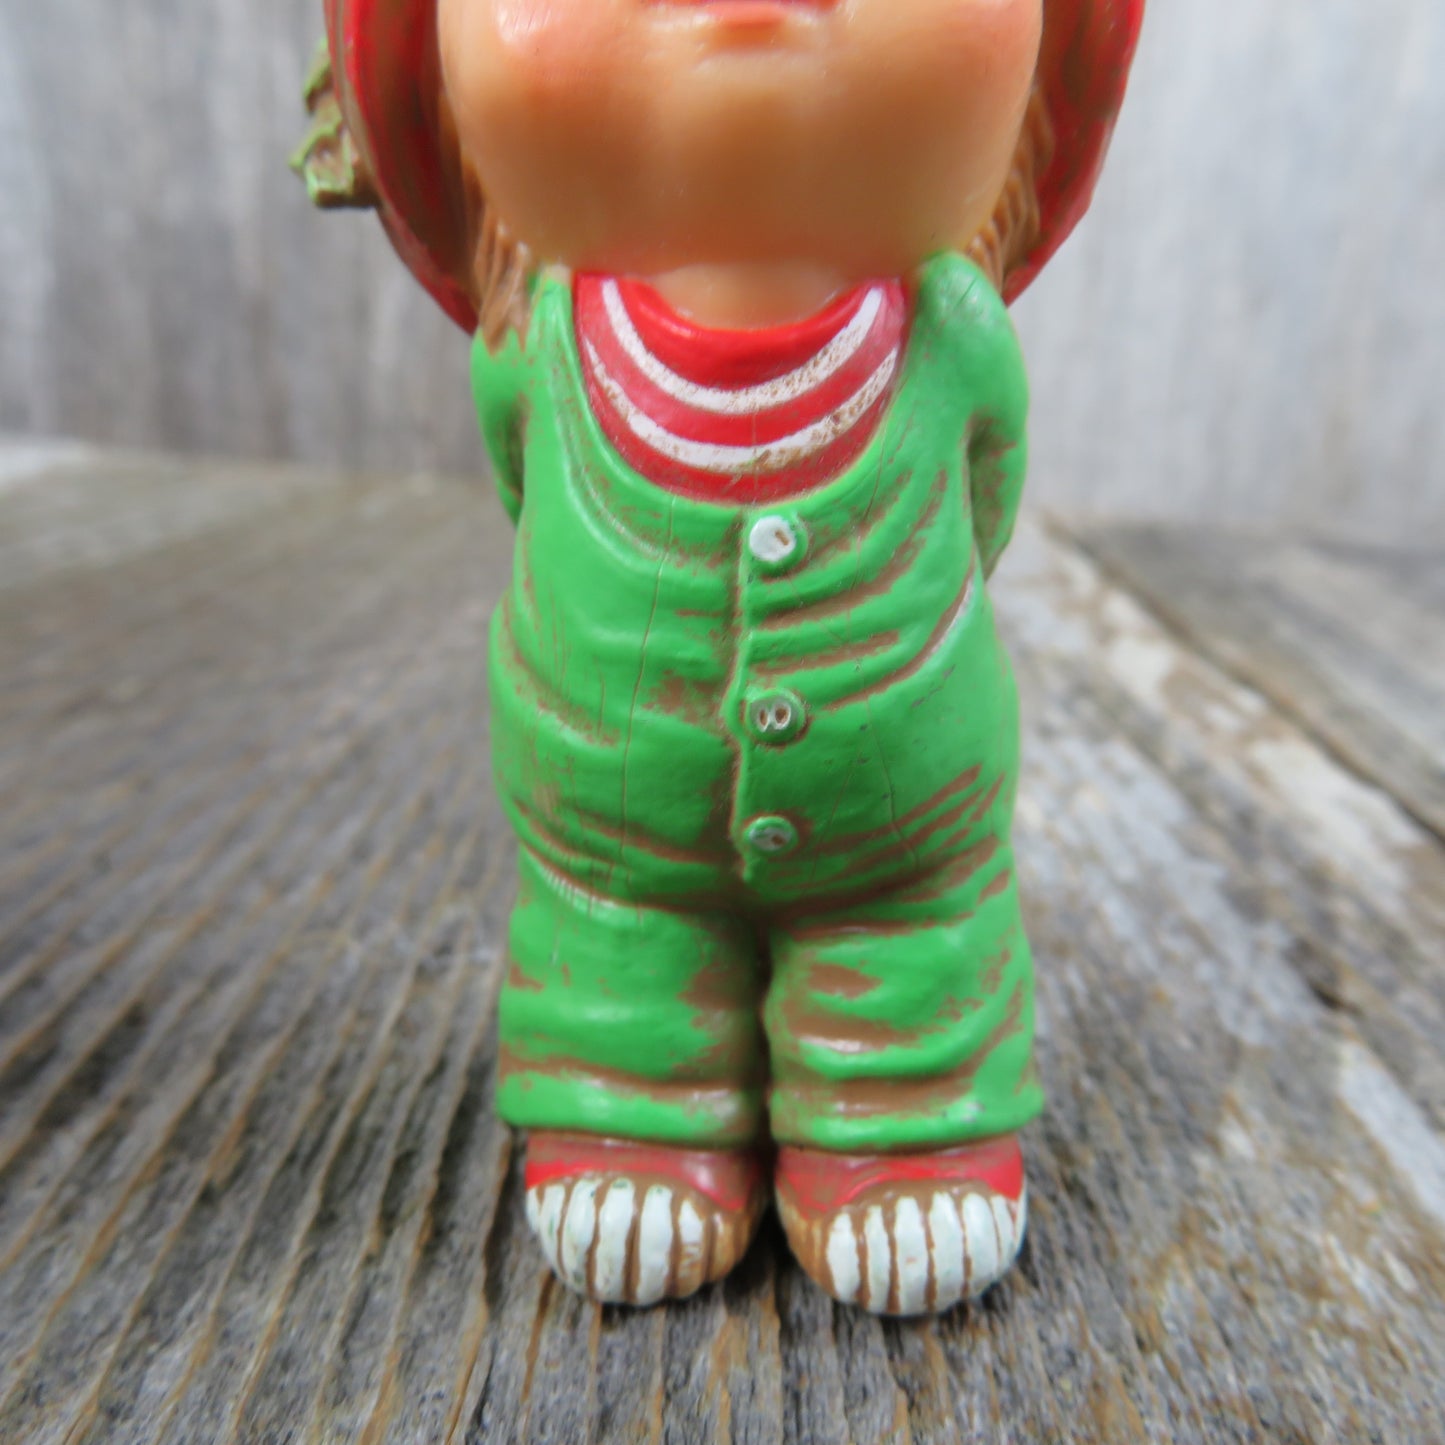 Vintage Elf Child with Present Ornament Hallmark Keepsake Christmas 1984 Red Hat - At Grandma's Table